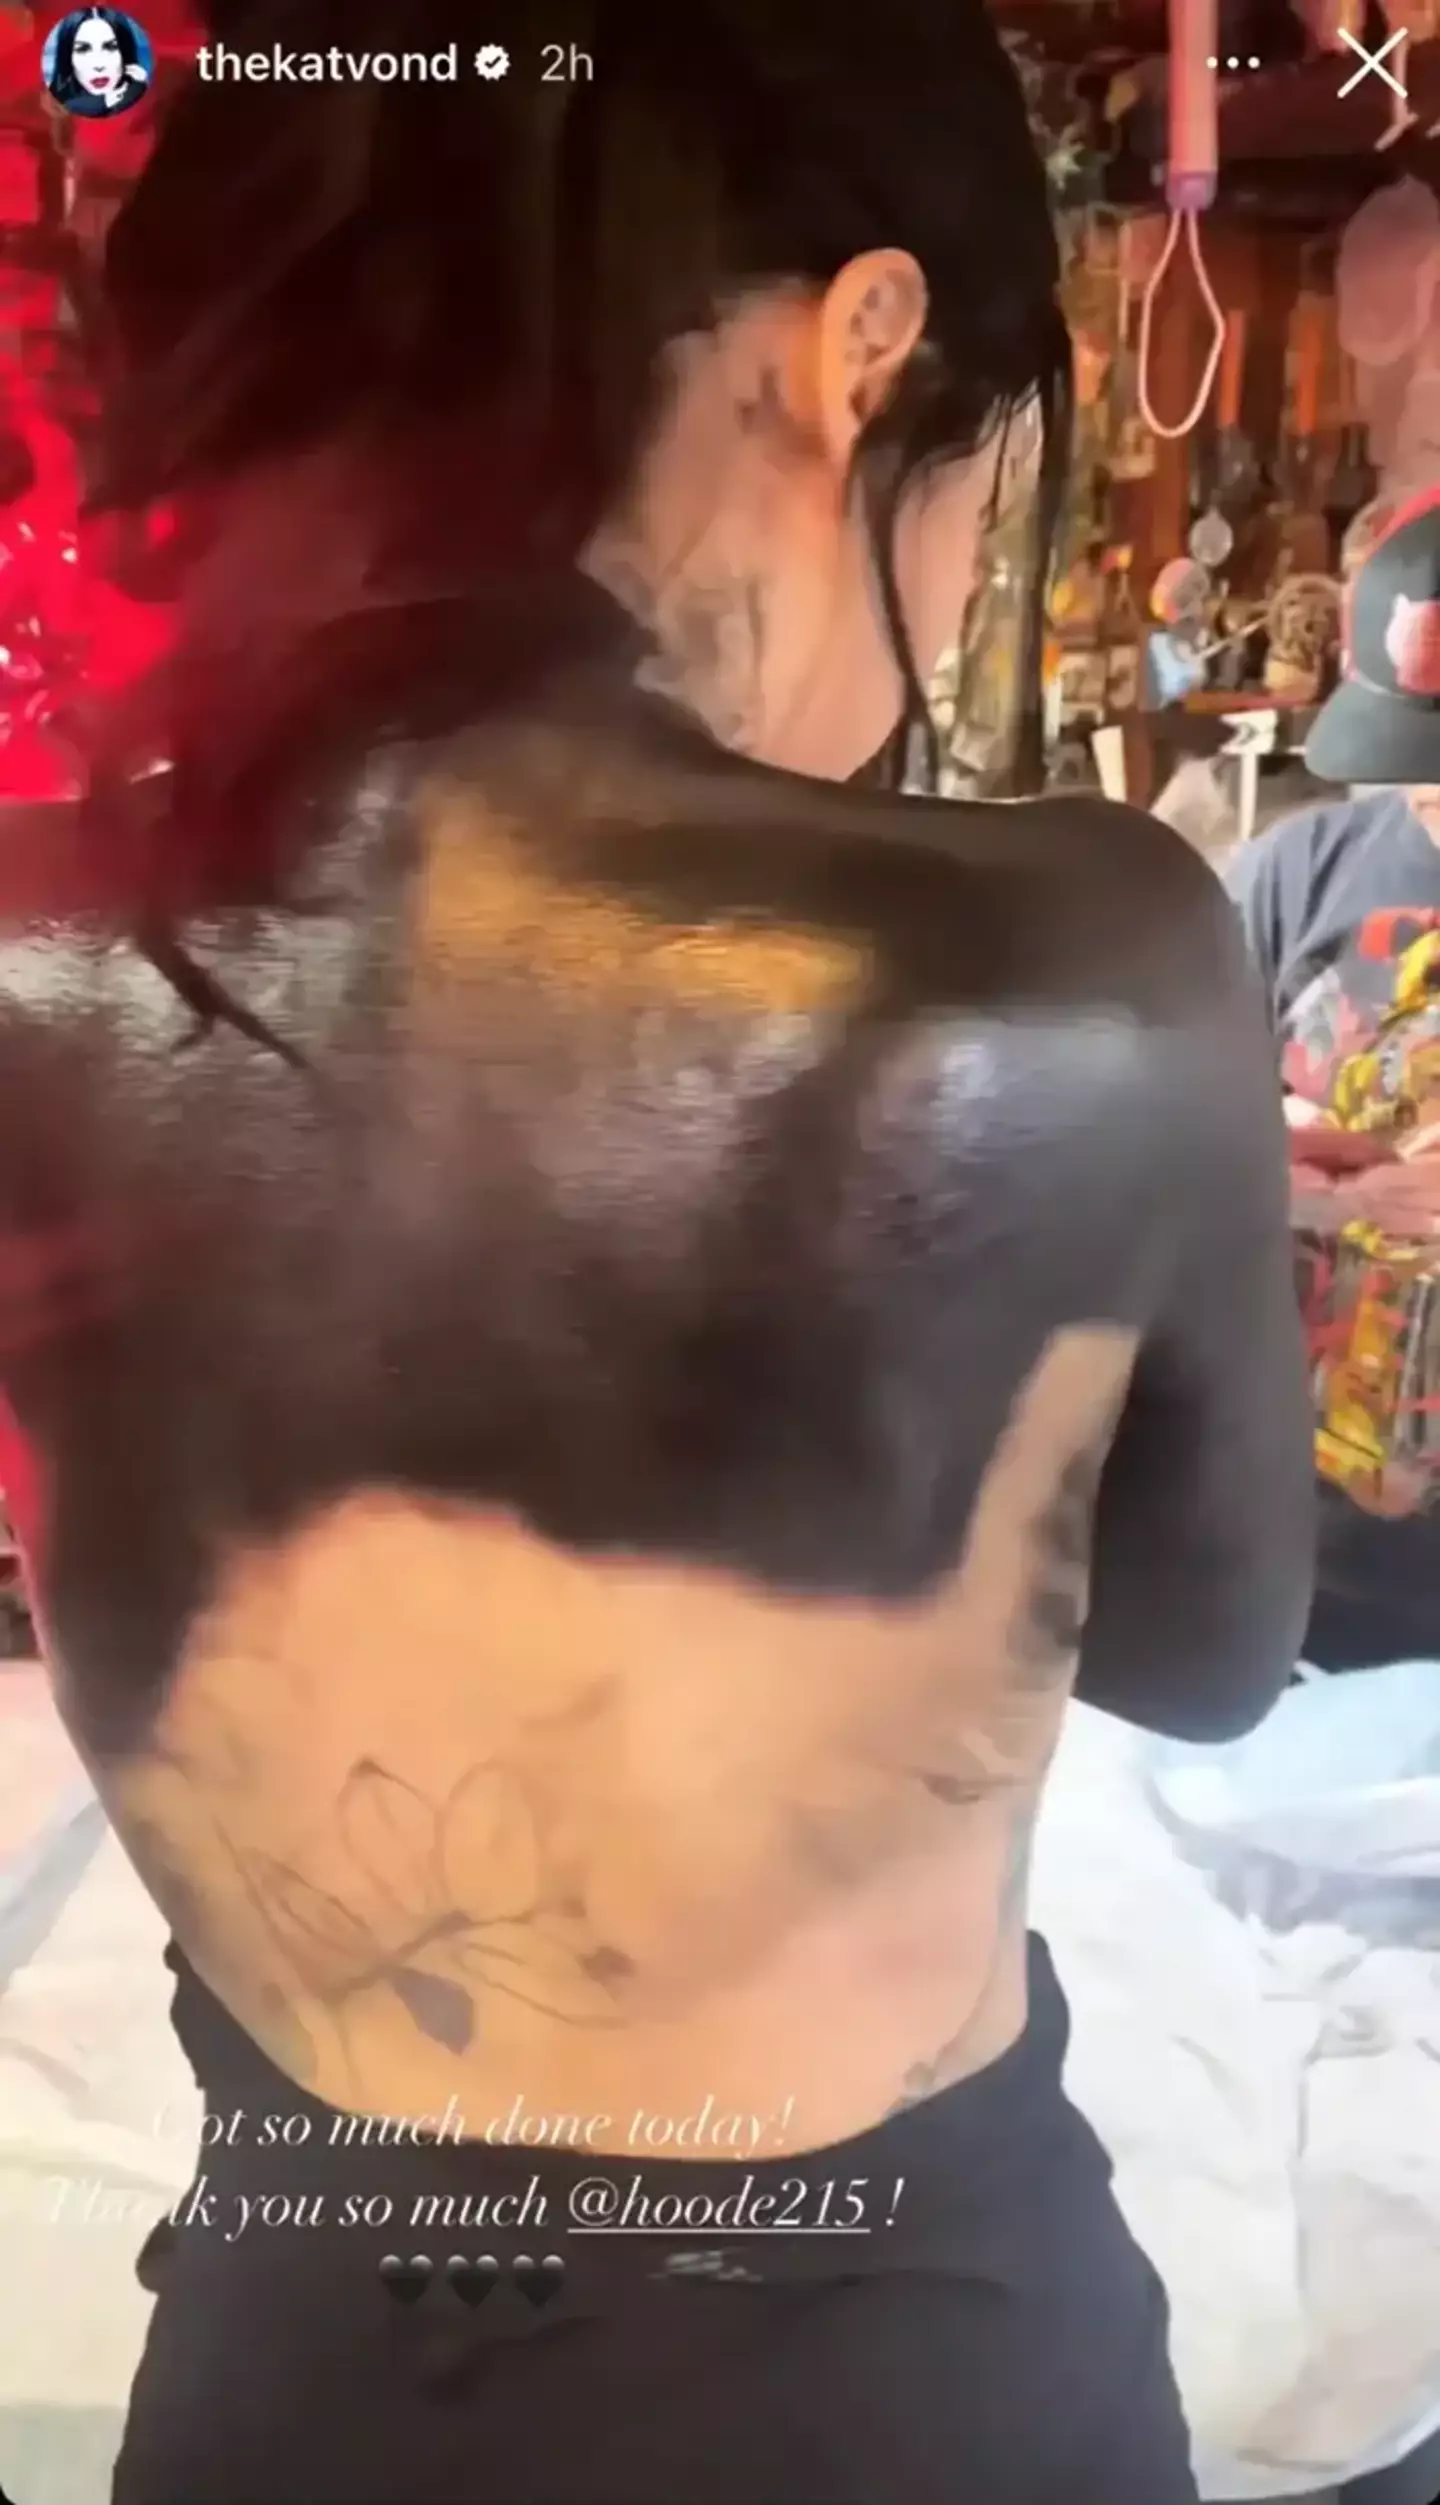 Kat Von D's cover-up extends halfway down her back.